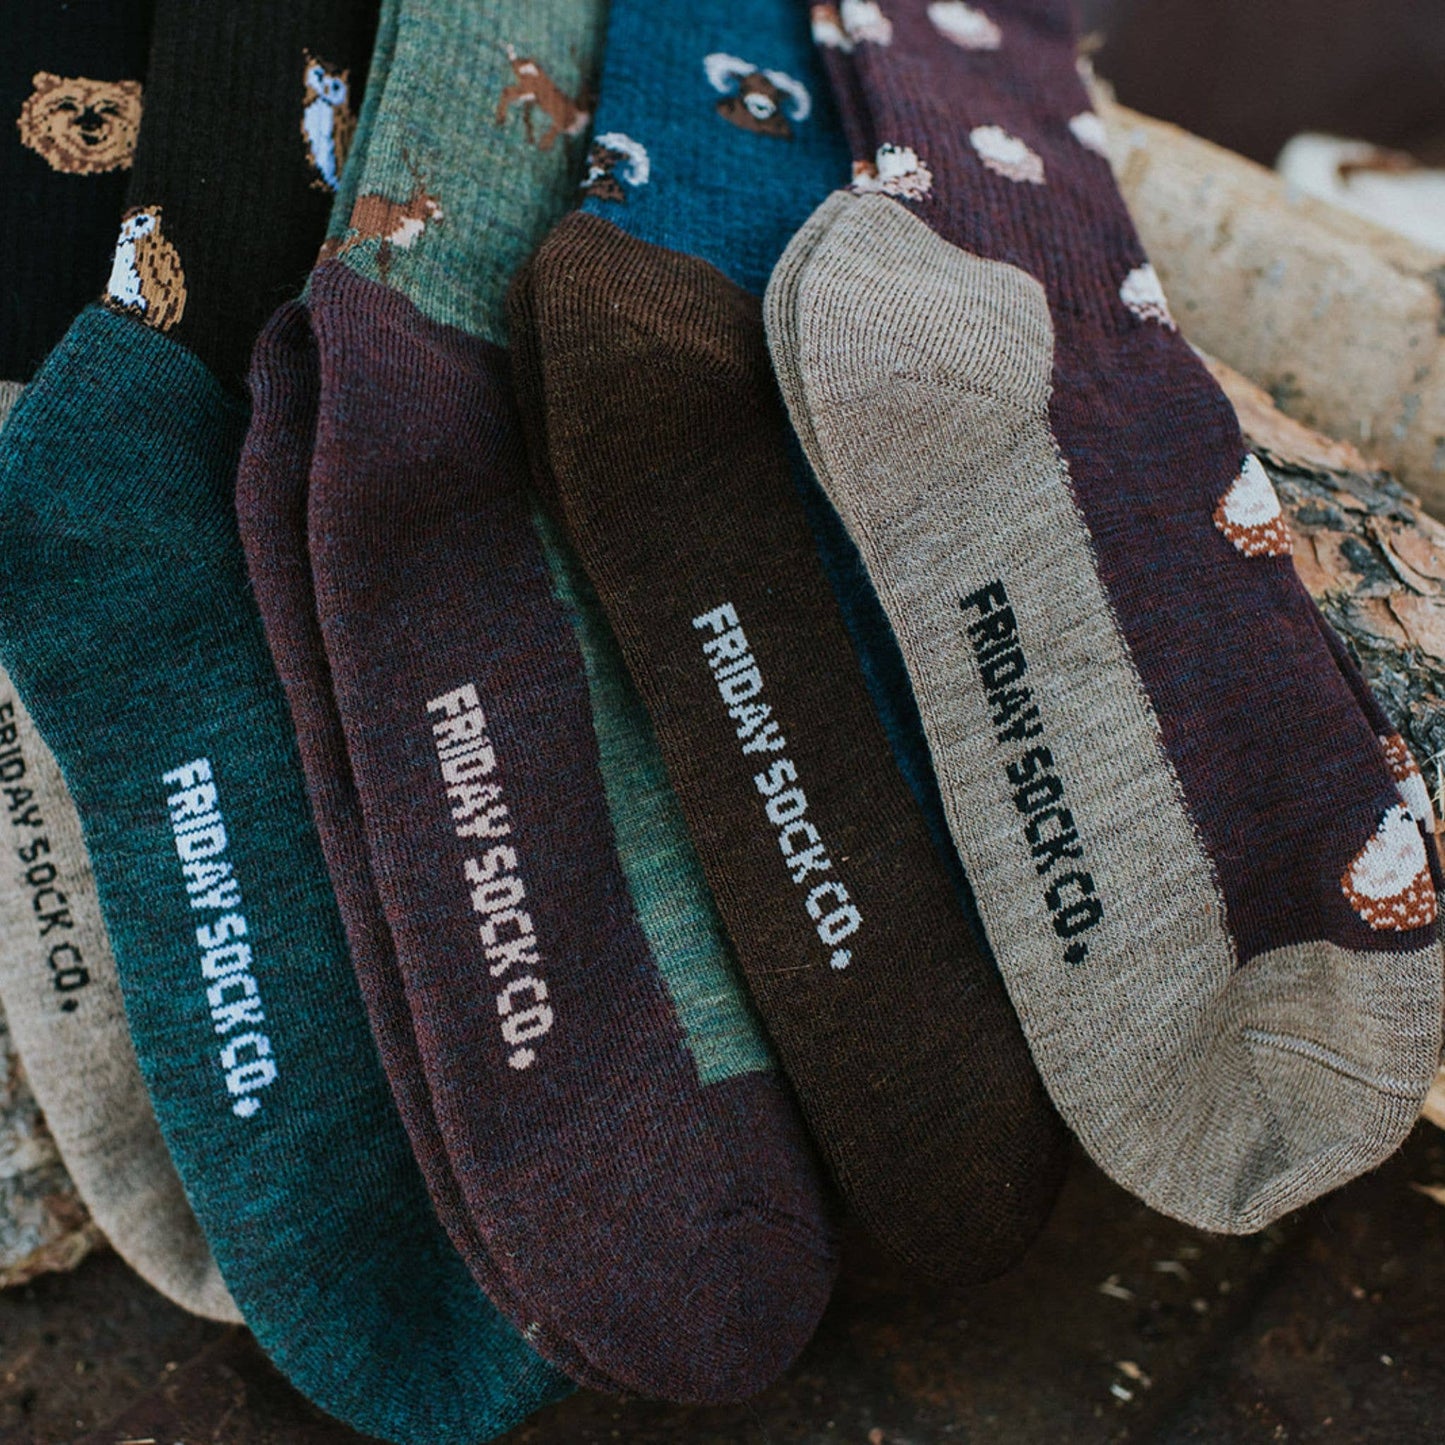 Men's Merino Wool Socks | Snowy Owl | Brown Owl | Mismatched